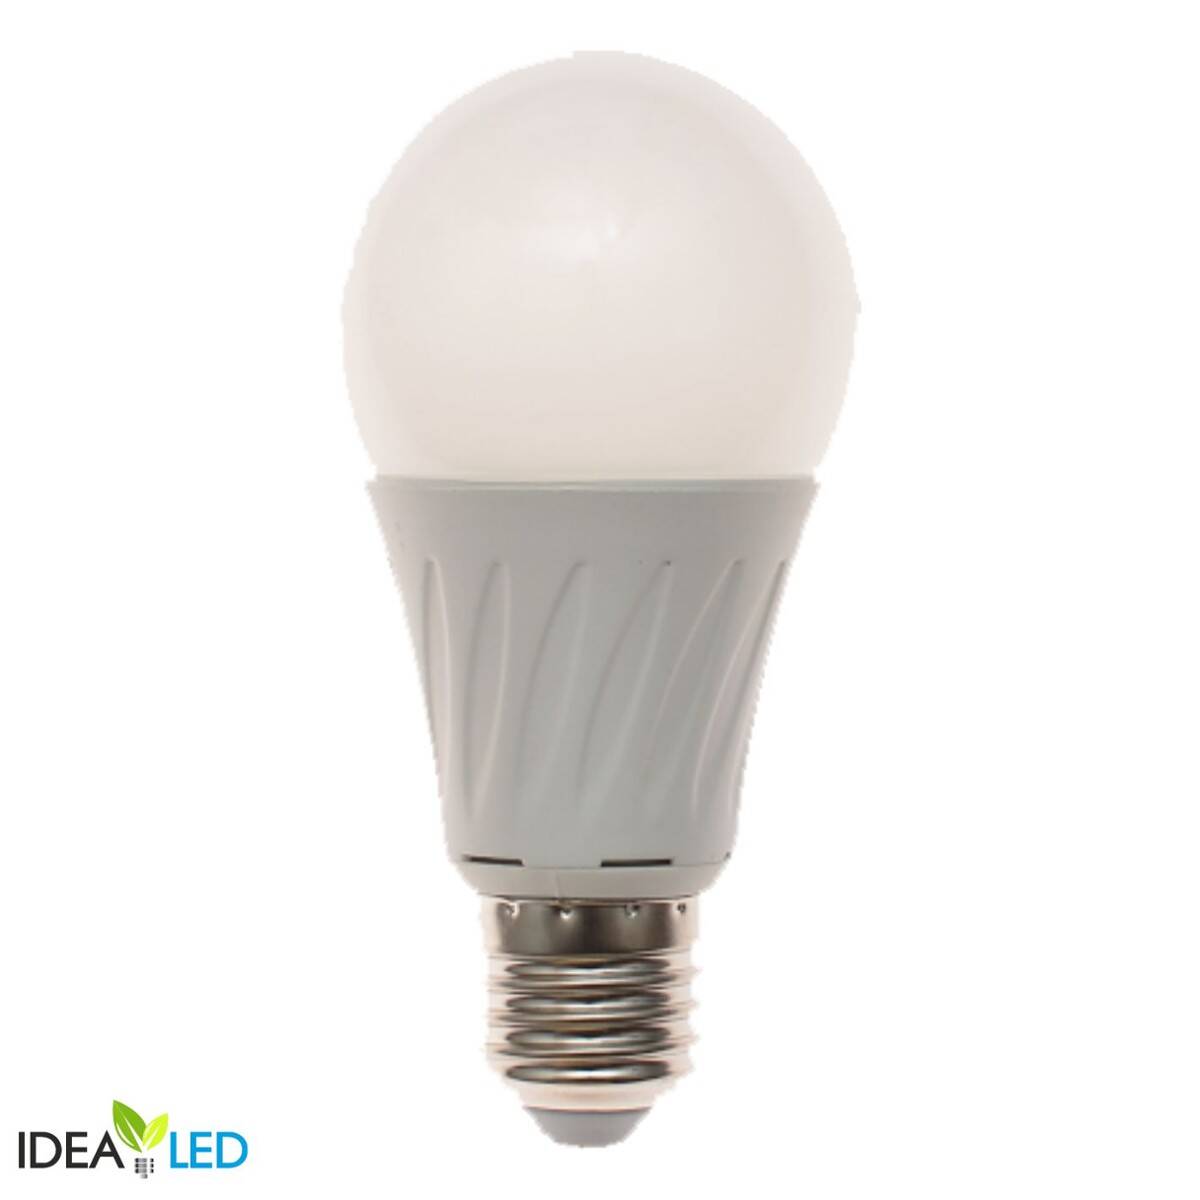 LED bulb SMD 2835 E27 12W - warm white